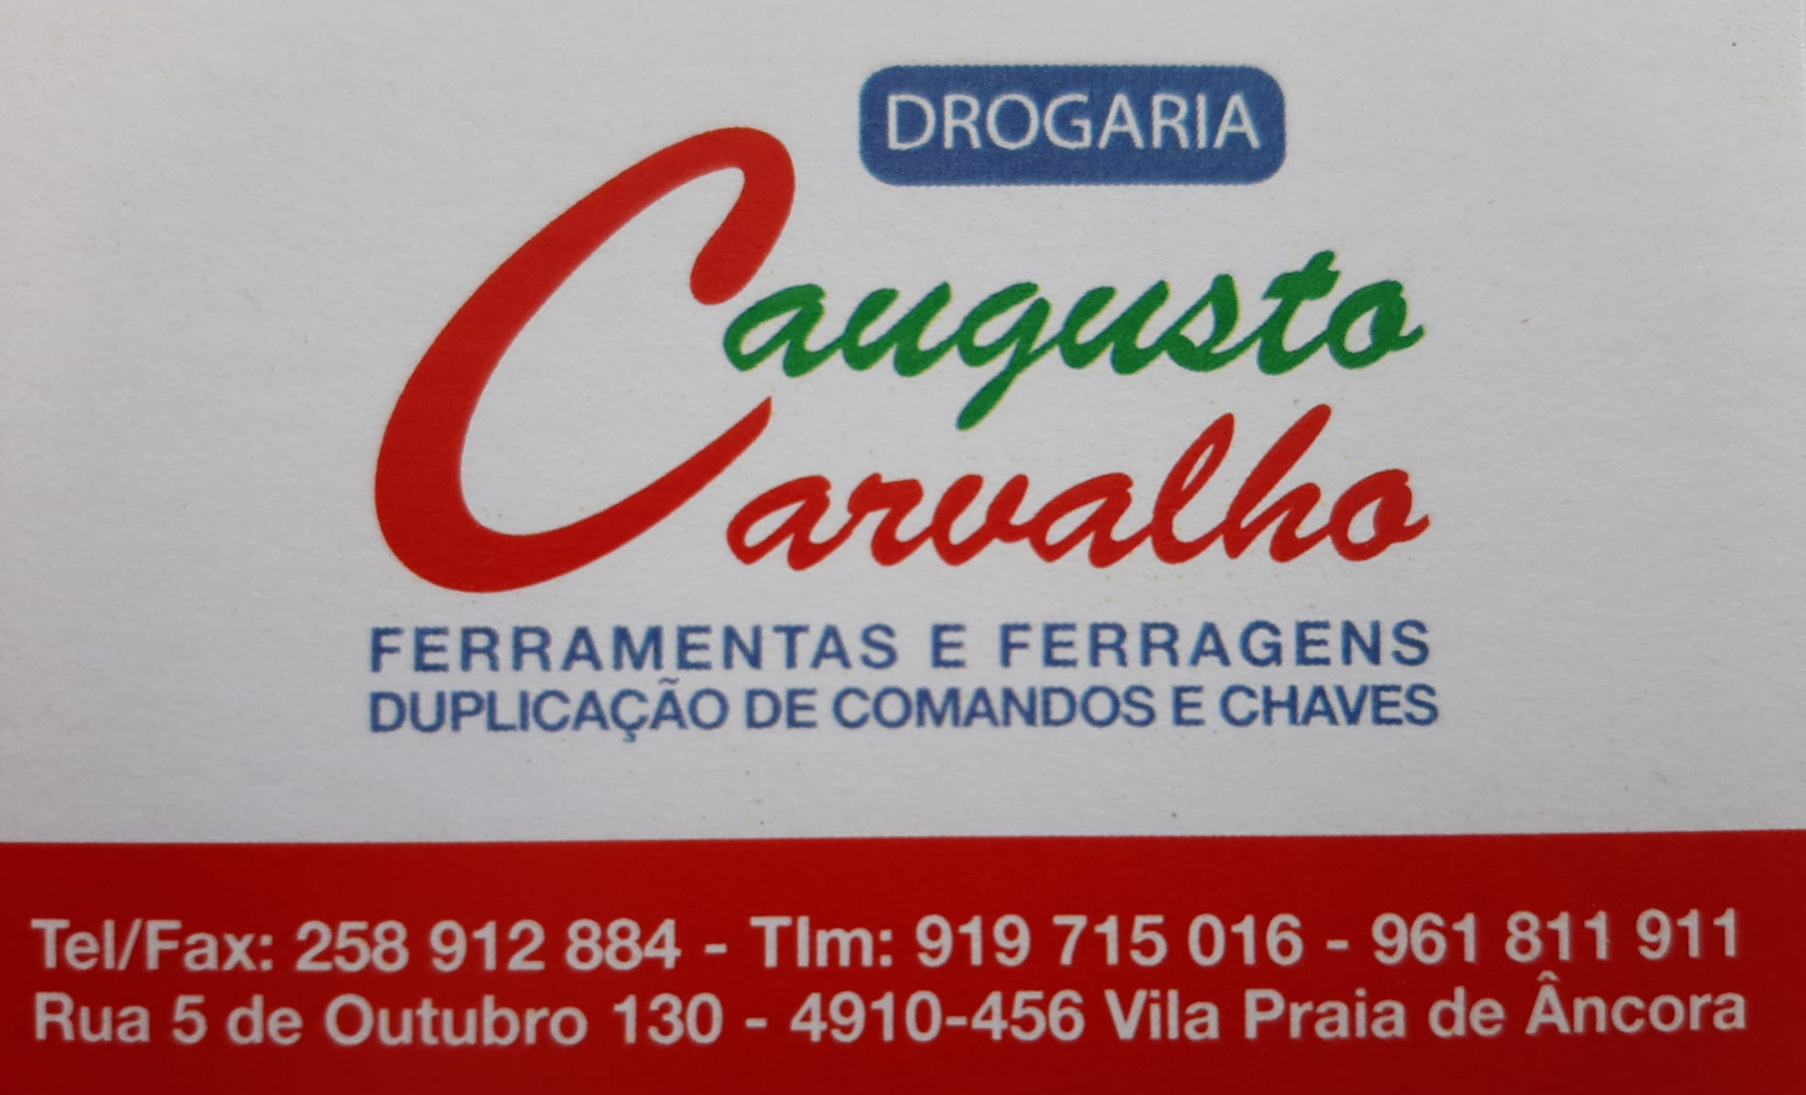 Augusto Carvalho, Lda